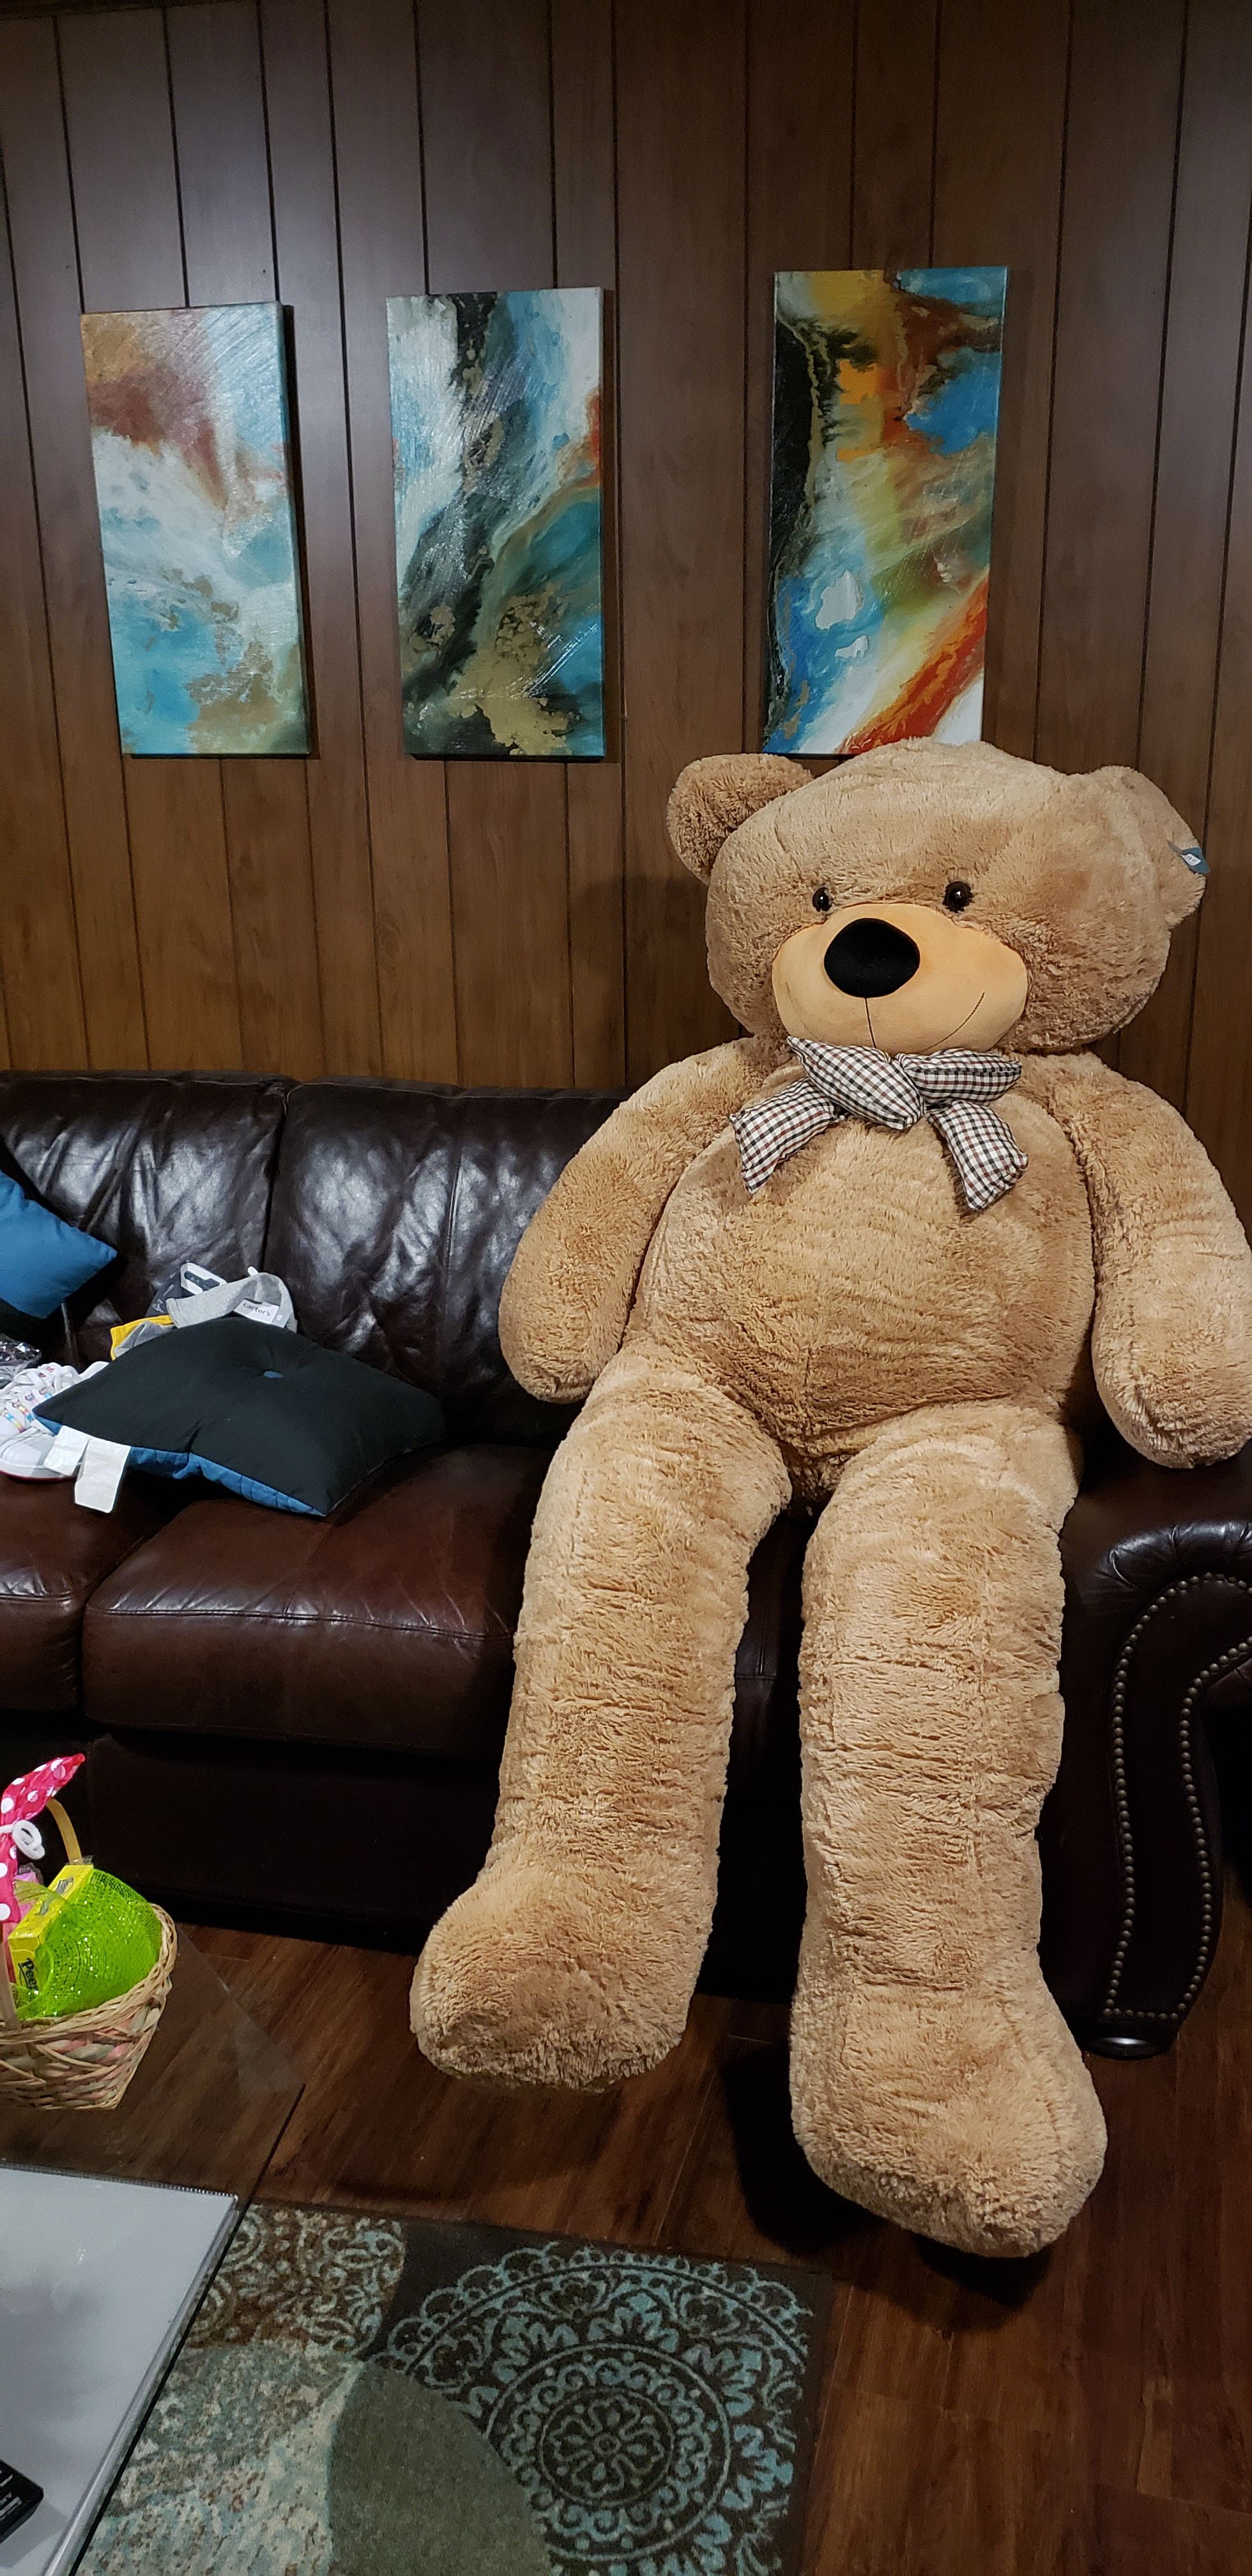 giant teddy bear over 6 feet tall, ready to meet up today